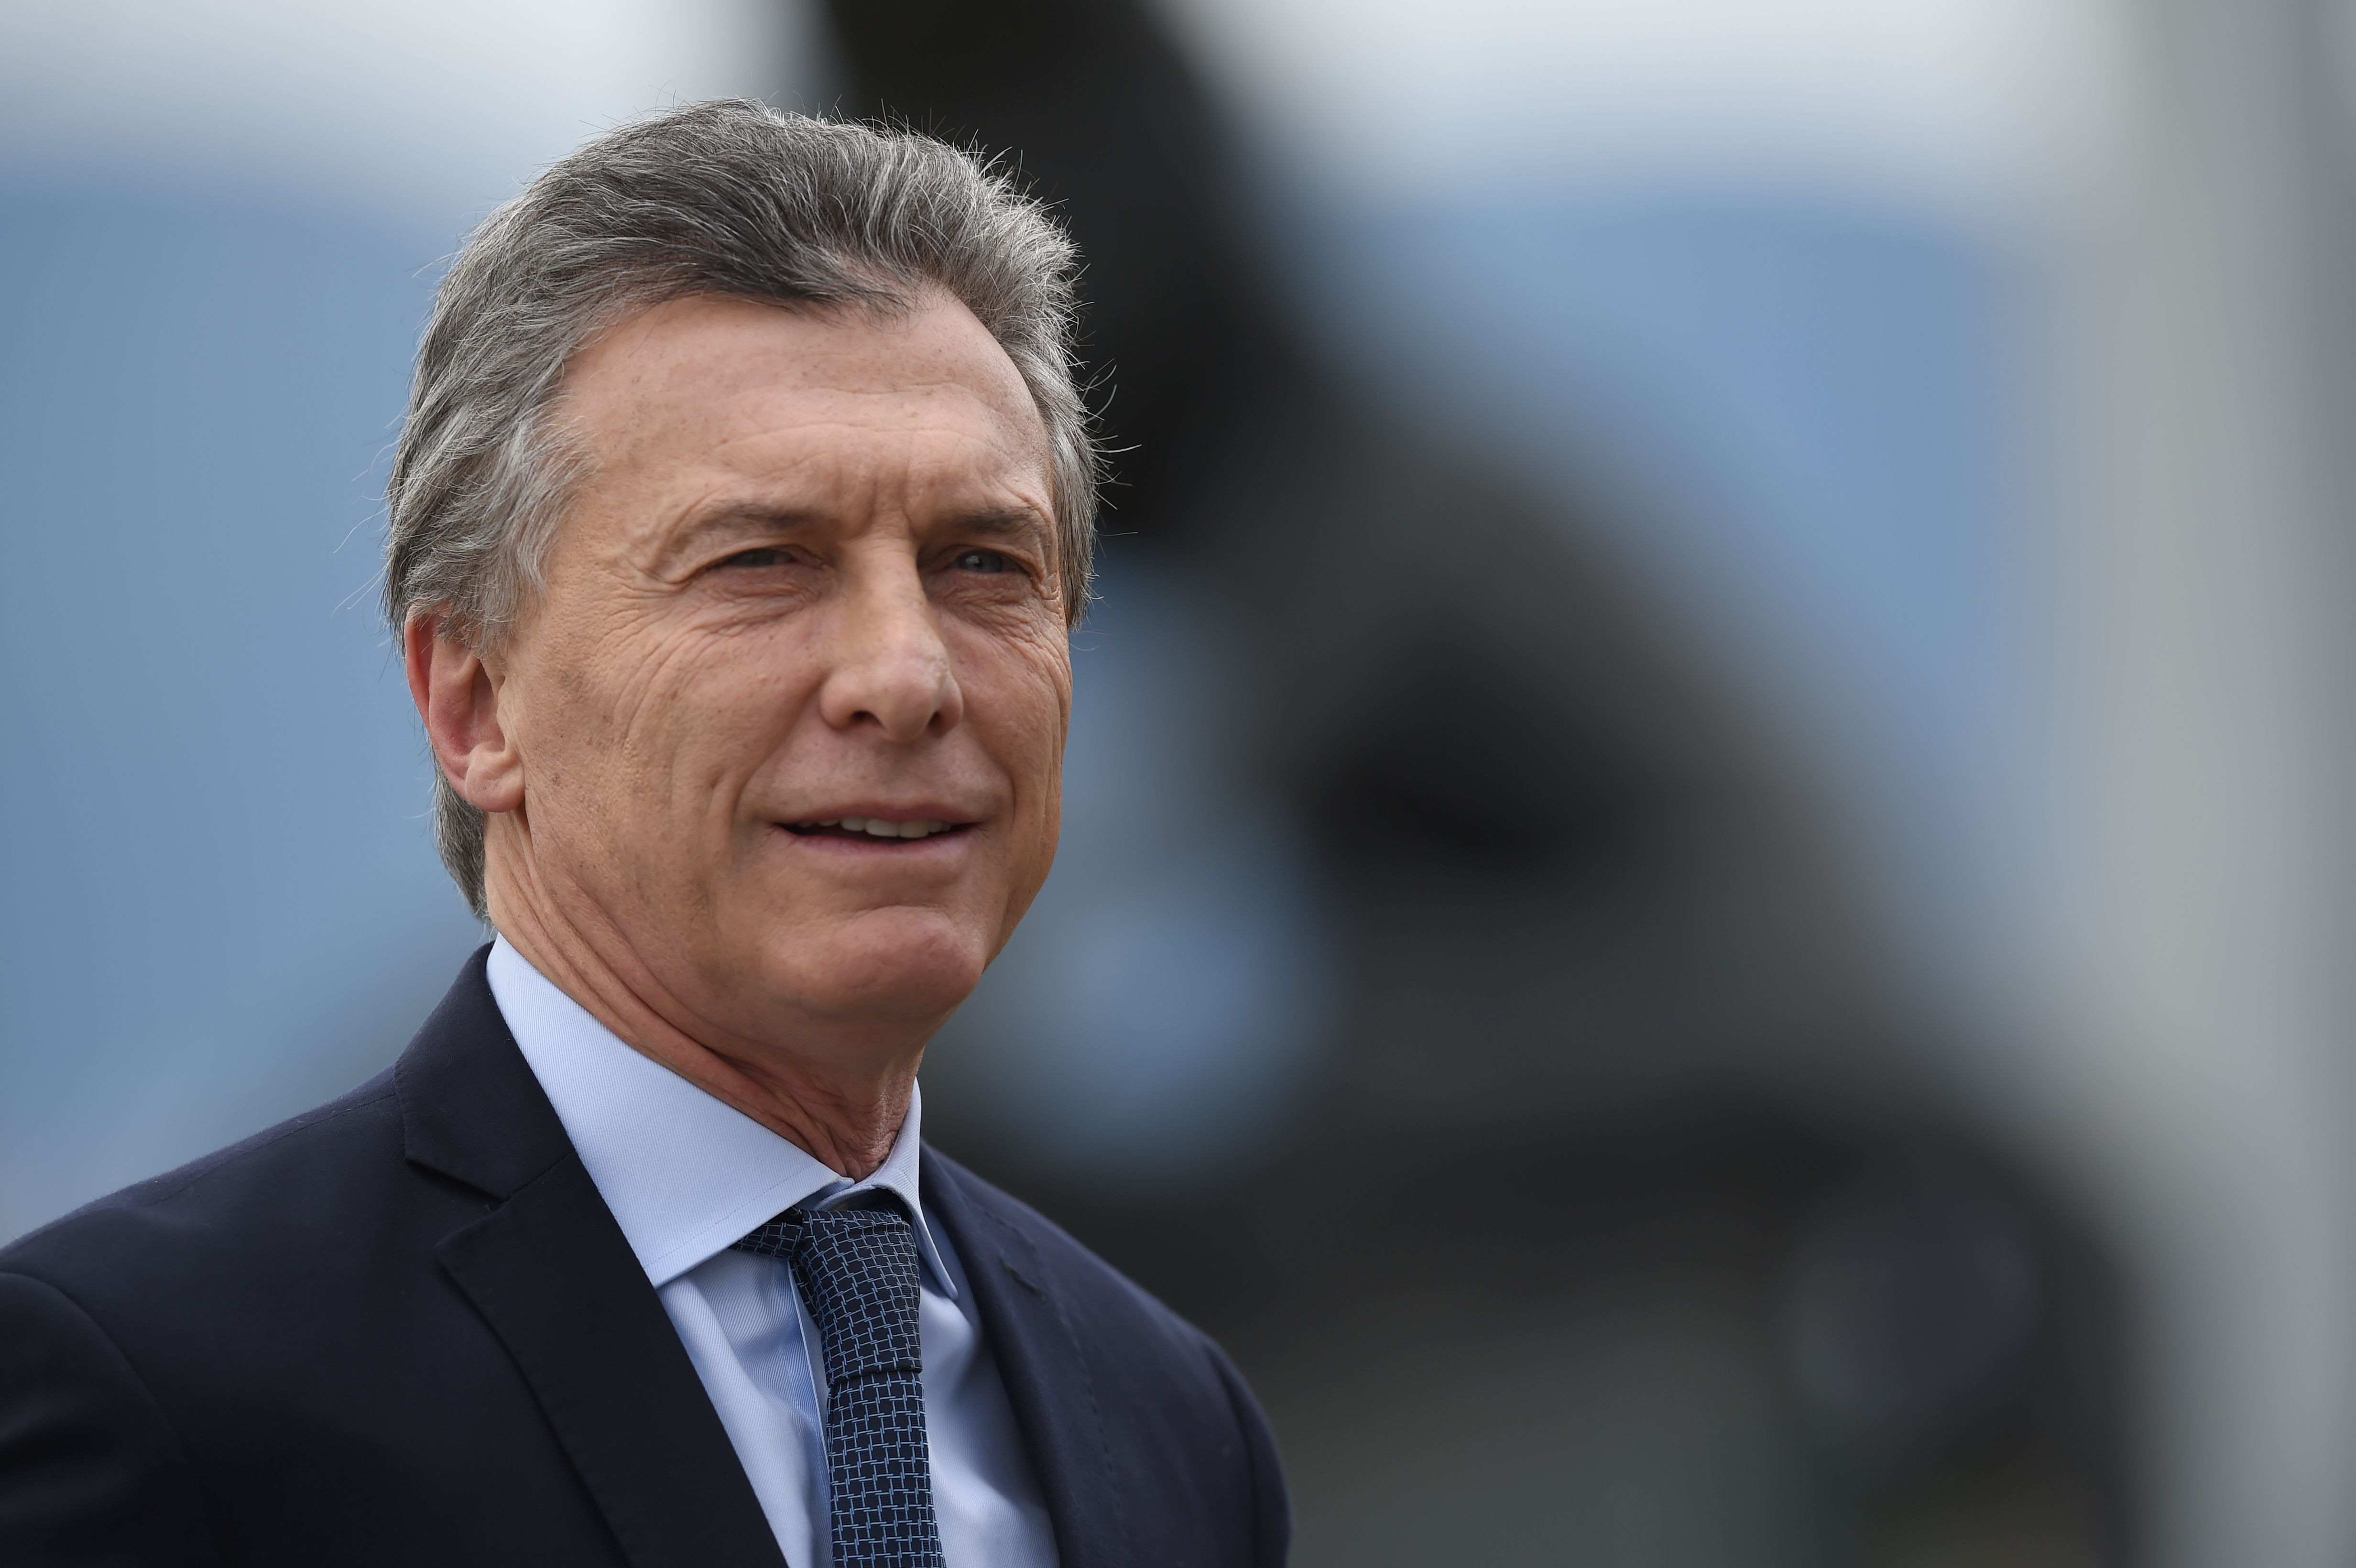 Luis Caputo takes on Argentina's worst economic crisis in decades